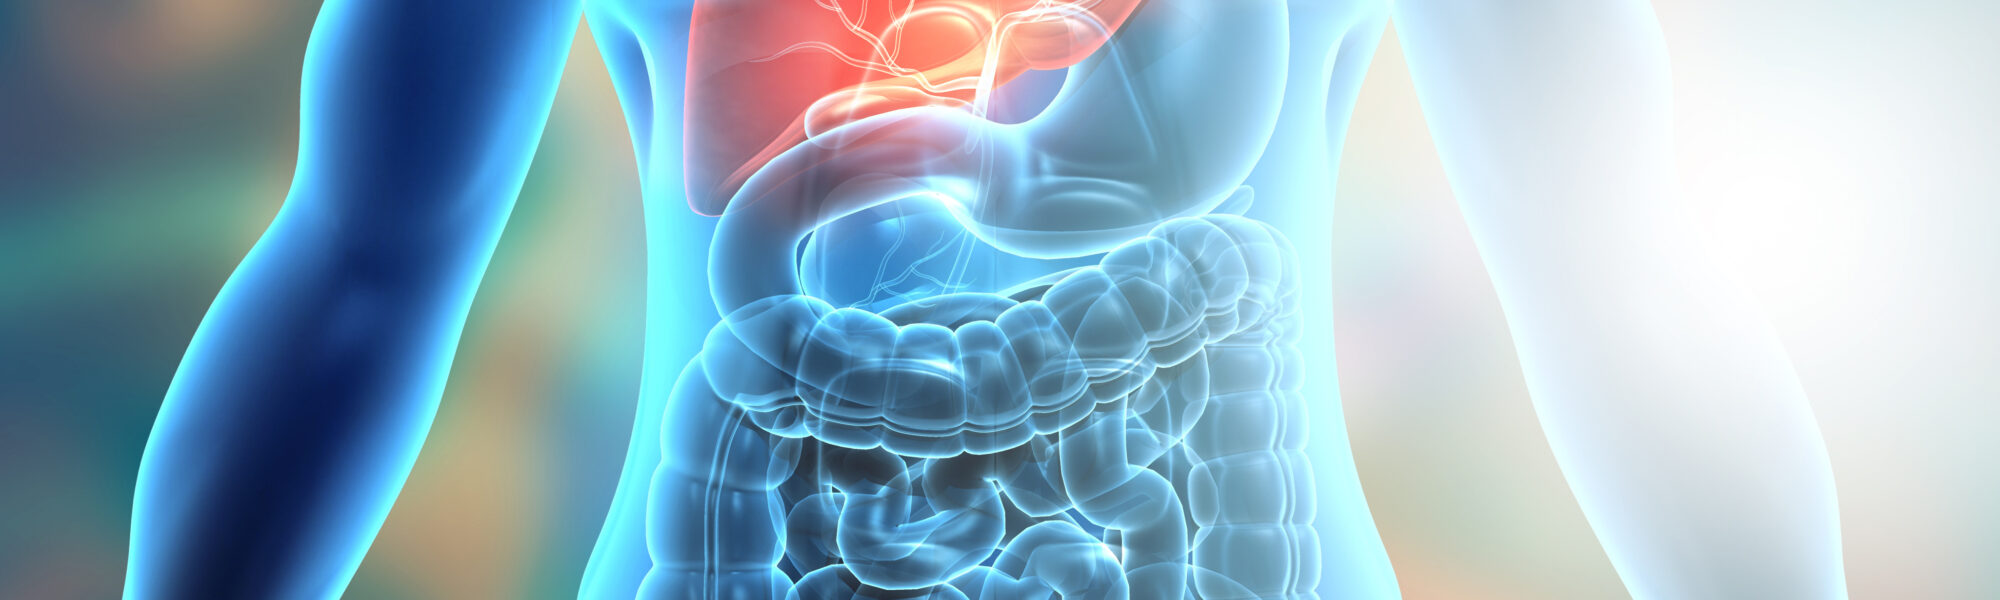 Human body pancreatic system